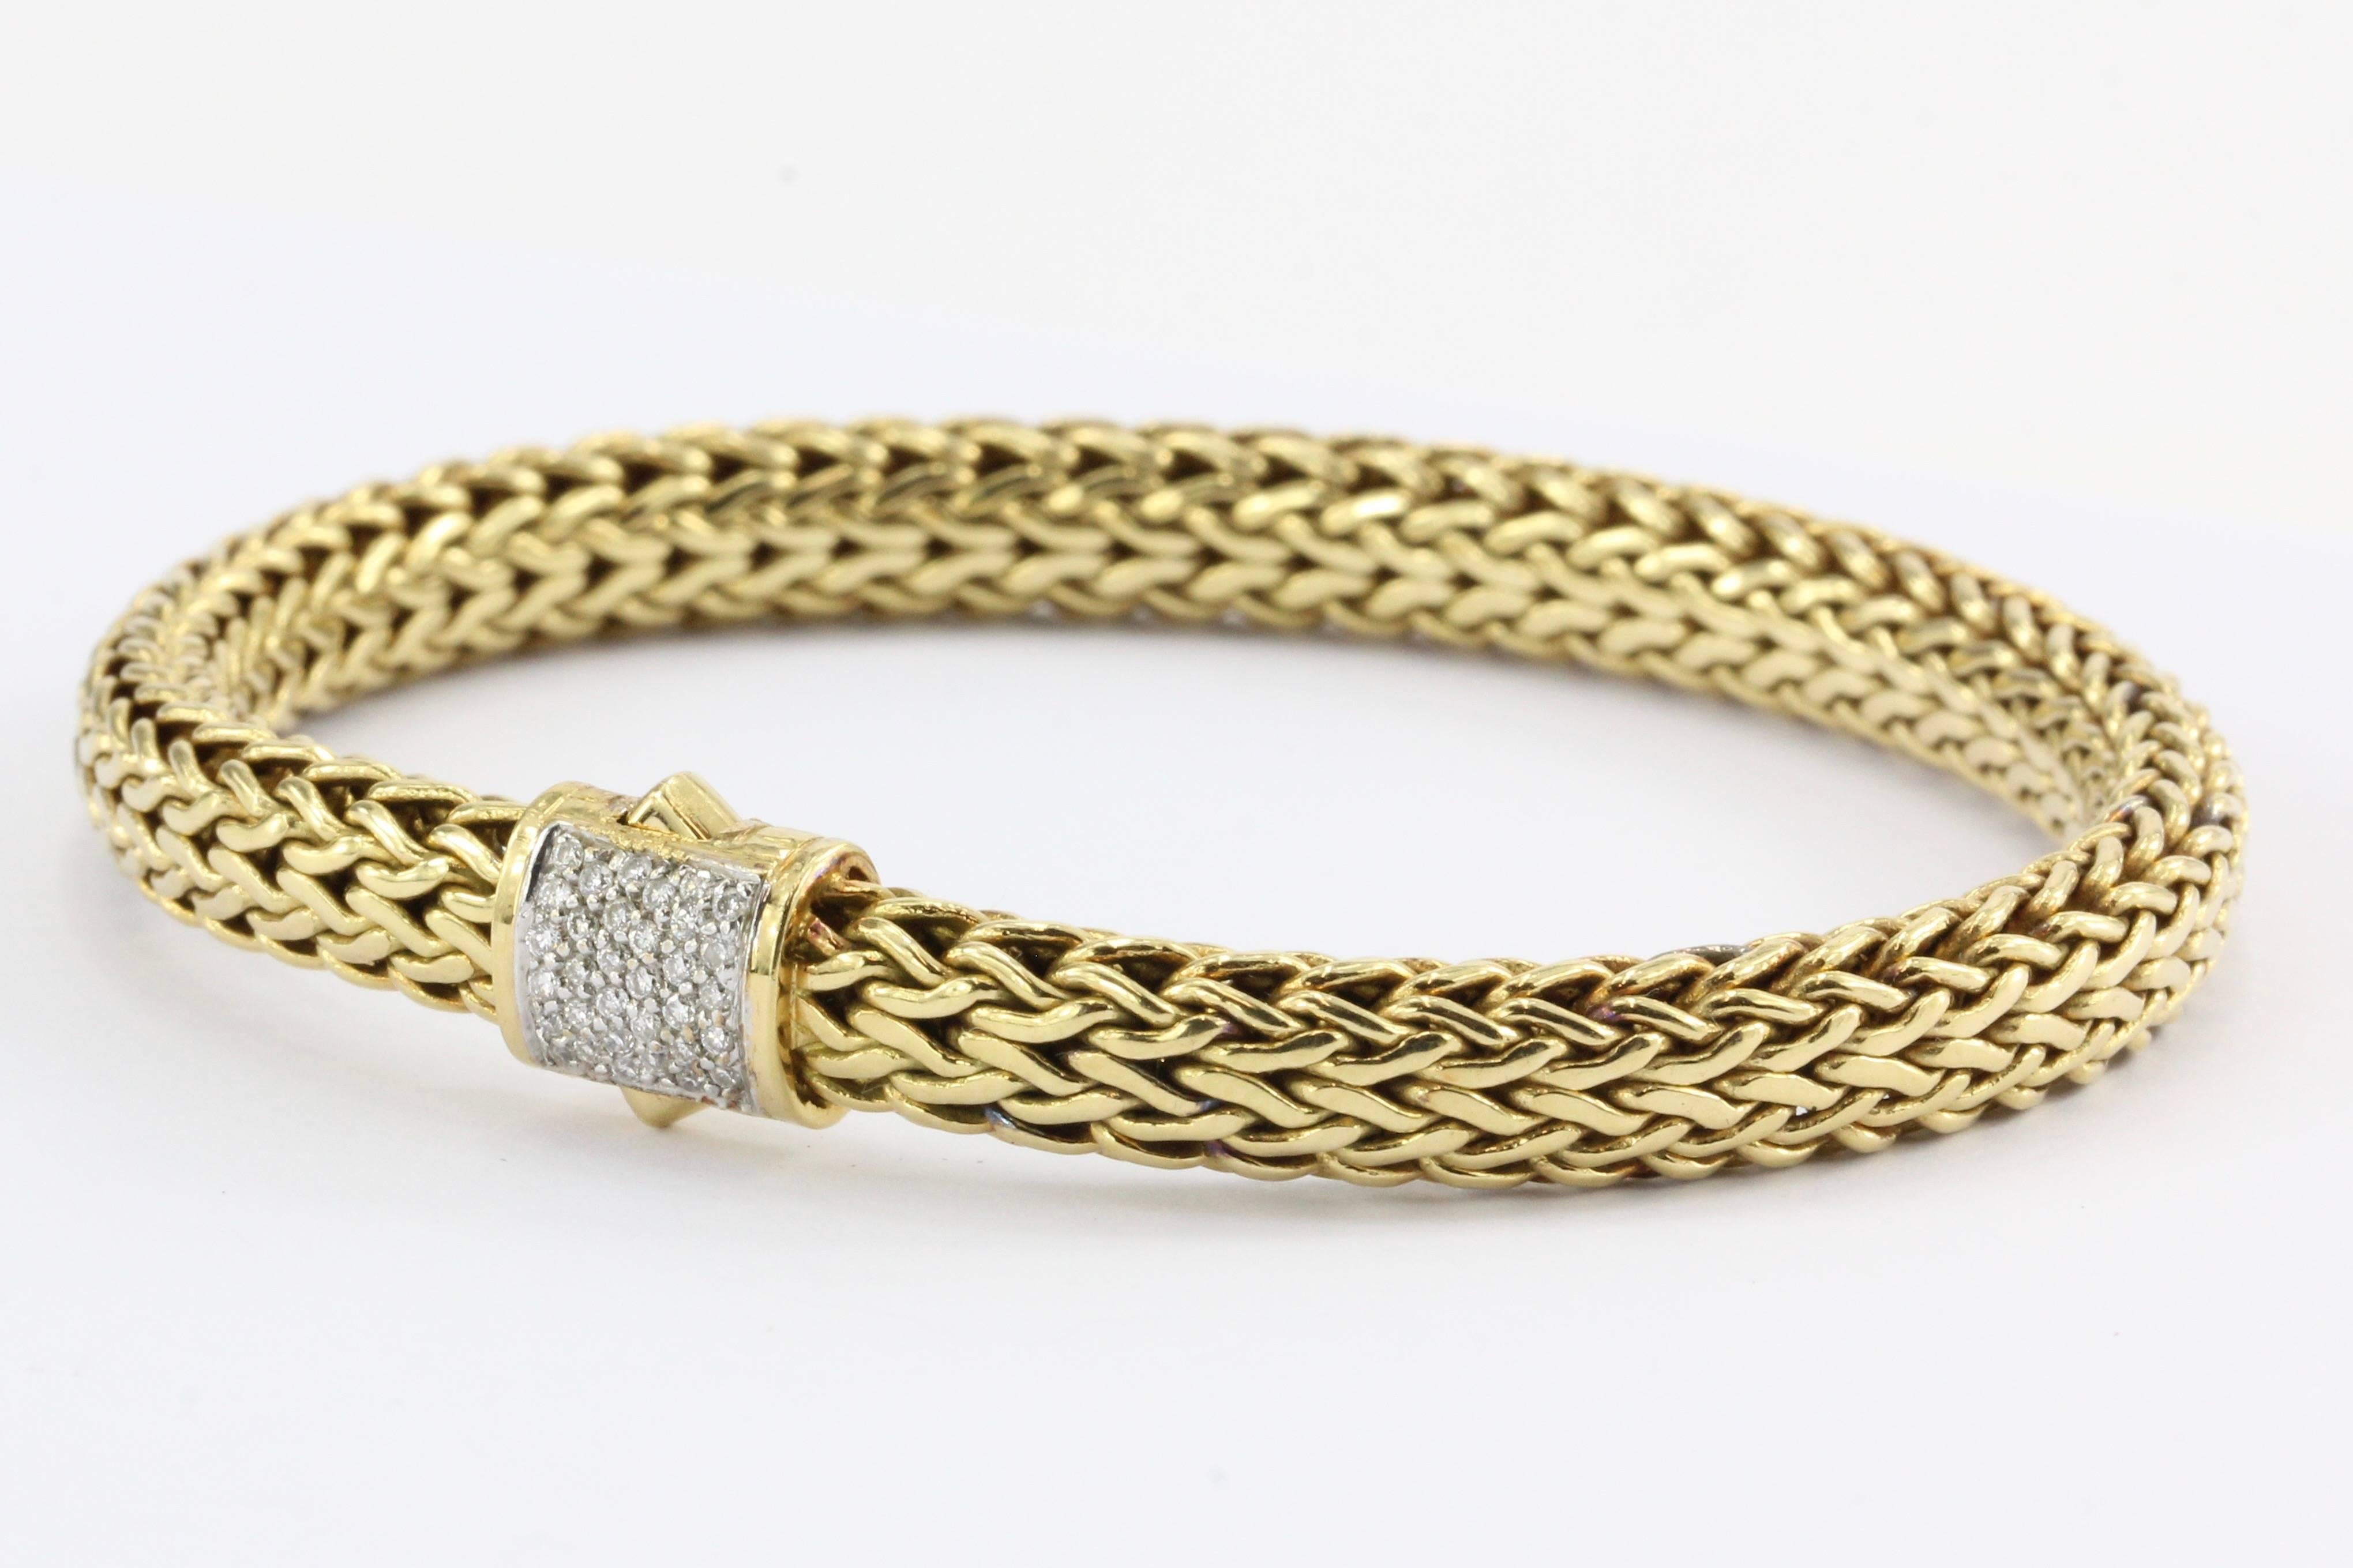 John Hardy 18k Gold Diamond Classic Chain Bracelet Medium Size

Hallmarks: JH 18K M

Composition: 18K Yellow Gold

Primary Stone: Diamonds

Stone Carat: .16 CTW

Color / Clarity: G / Vs1

Bracelet length: 7.5"

Bracelet width: 6.5mm

Bracelet